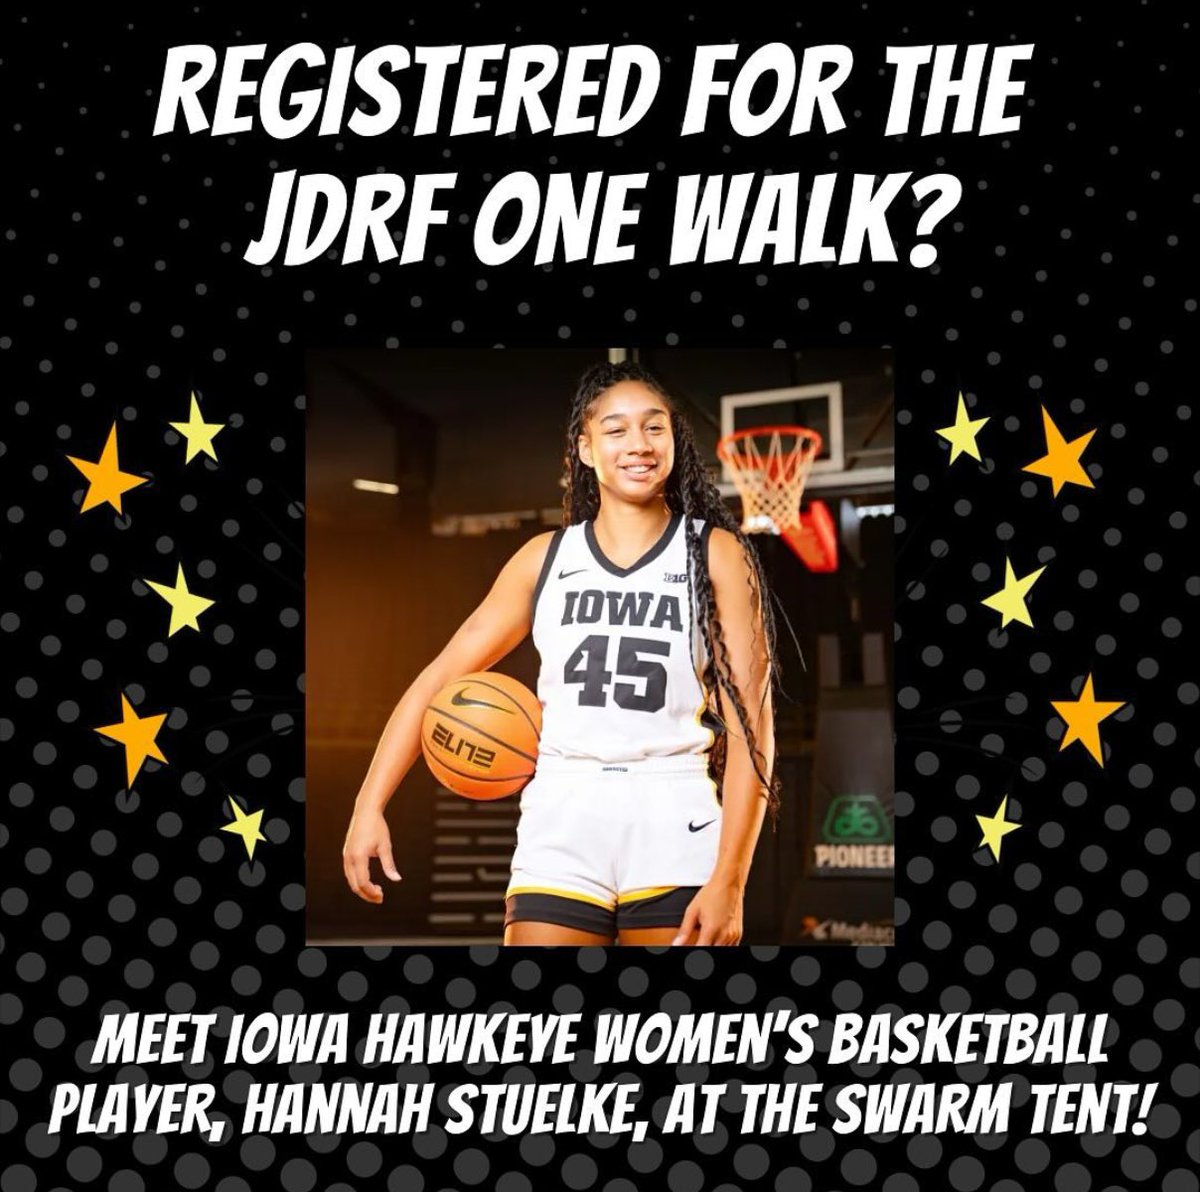 Come see @StuelkeHannah at the @JDRF One Walk this Saturday at Kirkwood Community College in Cedar Rapids!  Register by clicking on the link below. @IowaWBB @JDRFNEIA @KirkwoodCC @CRWashingtonHS @IowaSwarm 

www2.jdrf.org/site/TR?fr_id=…